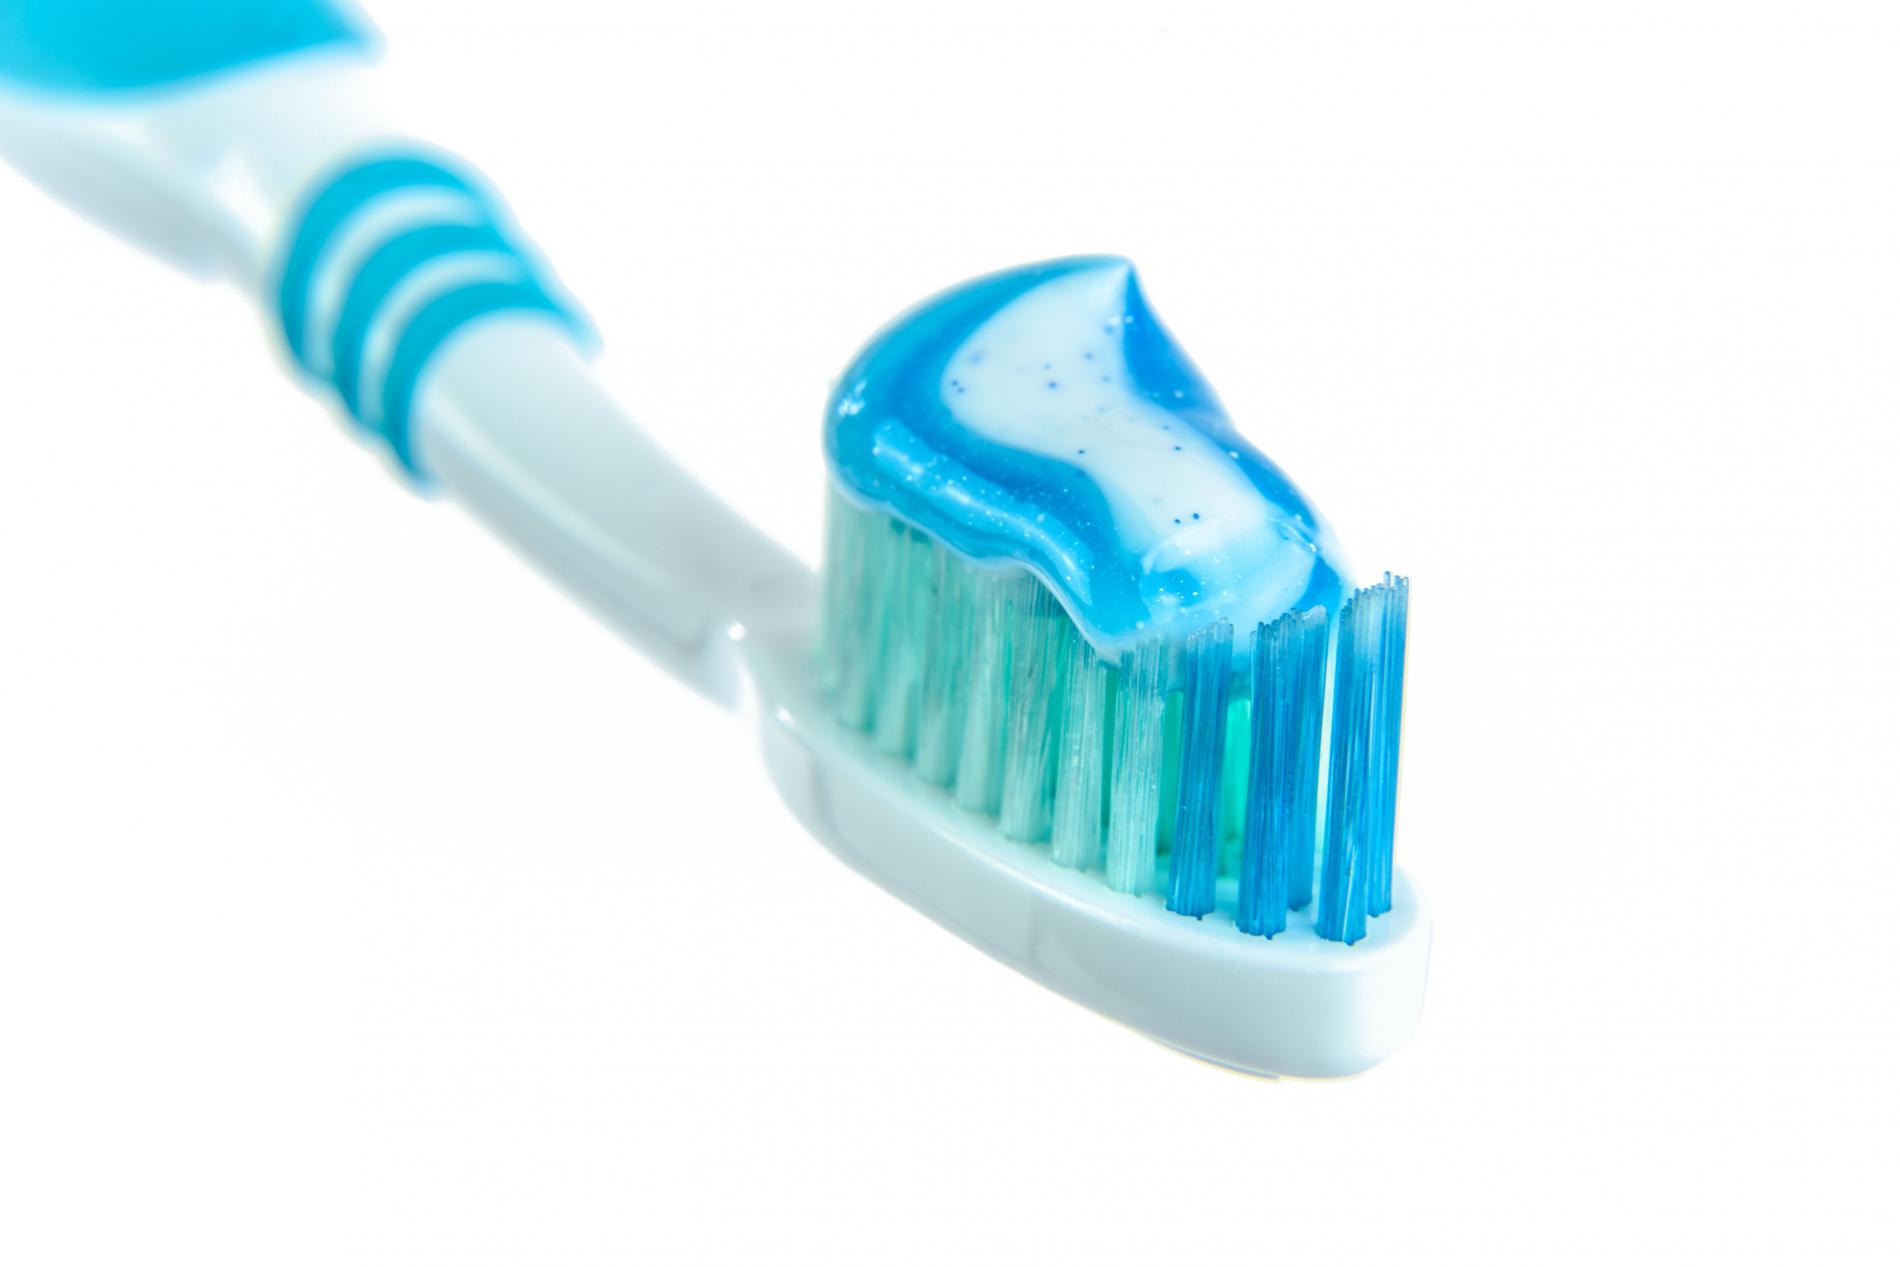 Jangan Gunakan Pasta Gigi untuk Menghilangkan Jerawat, Simak Bahaya Pasta Gigi bagi Kulit